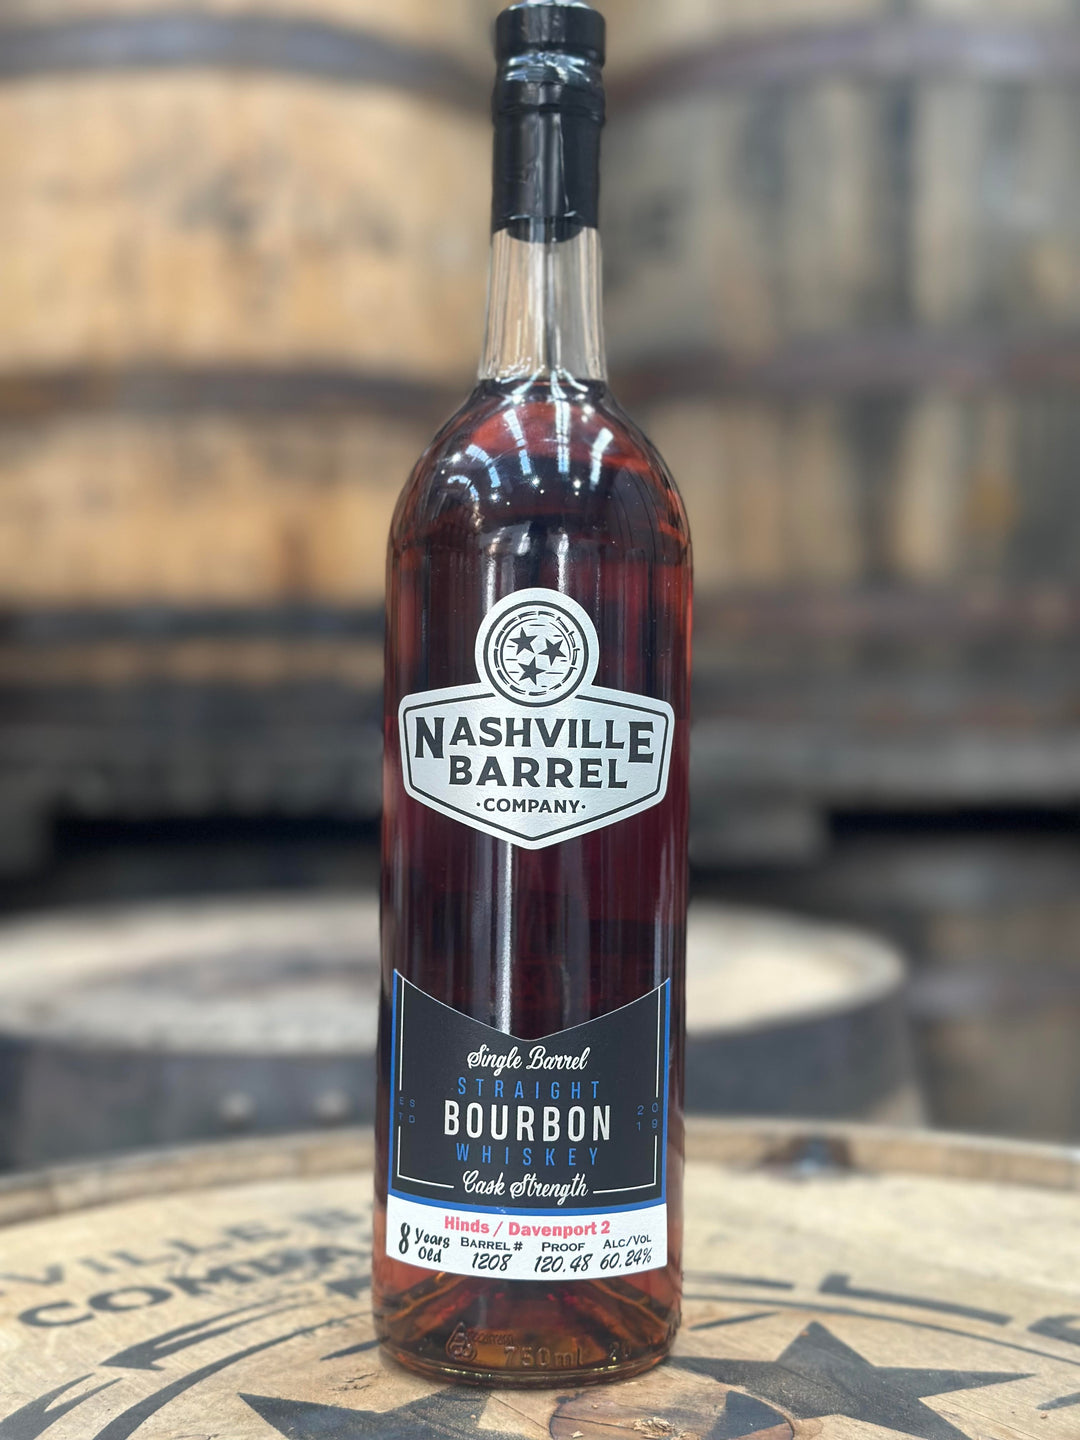 Nashville Barrel Co 8yr Single Barrel Bourbon - #1208 - Hinds / Davenport 2 - 120.48 Proof